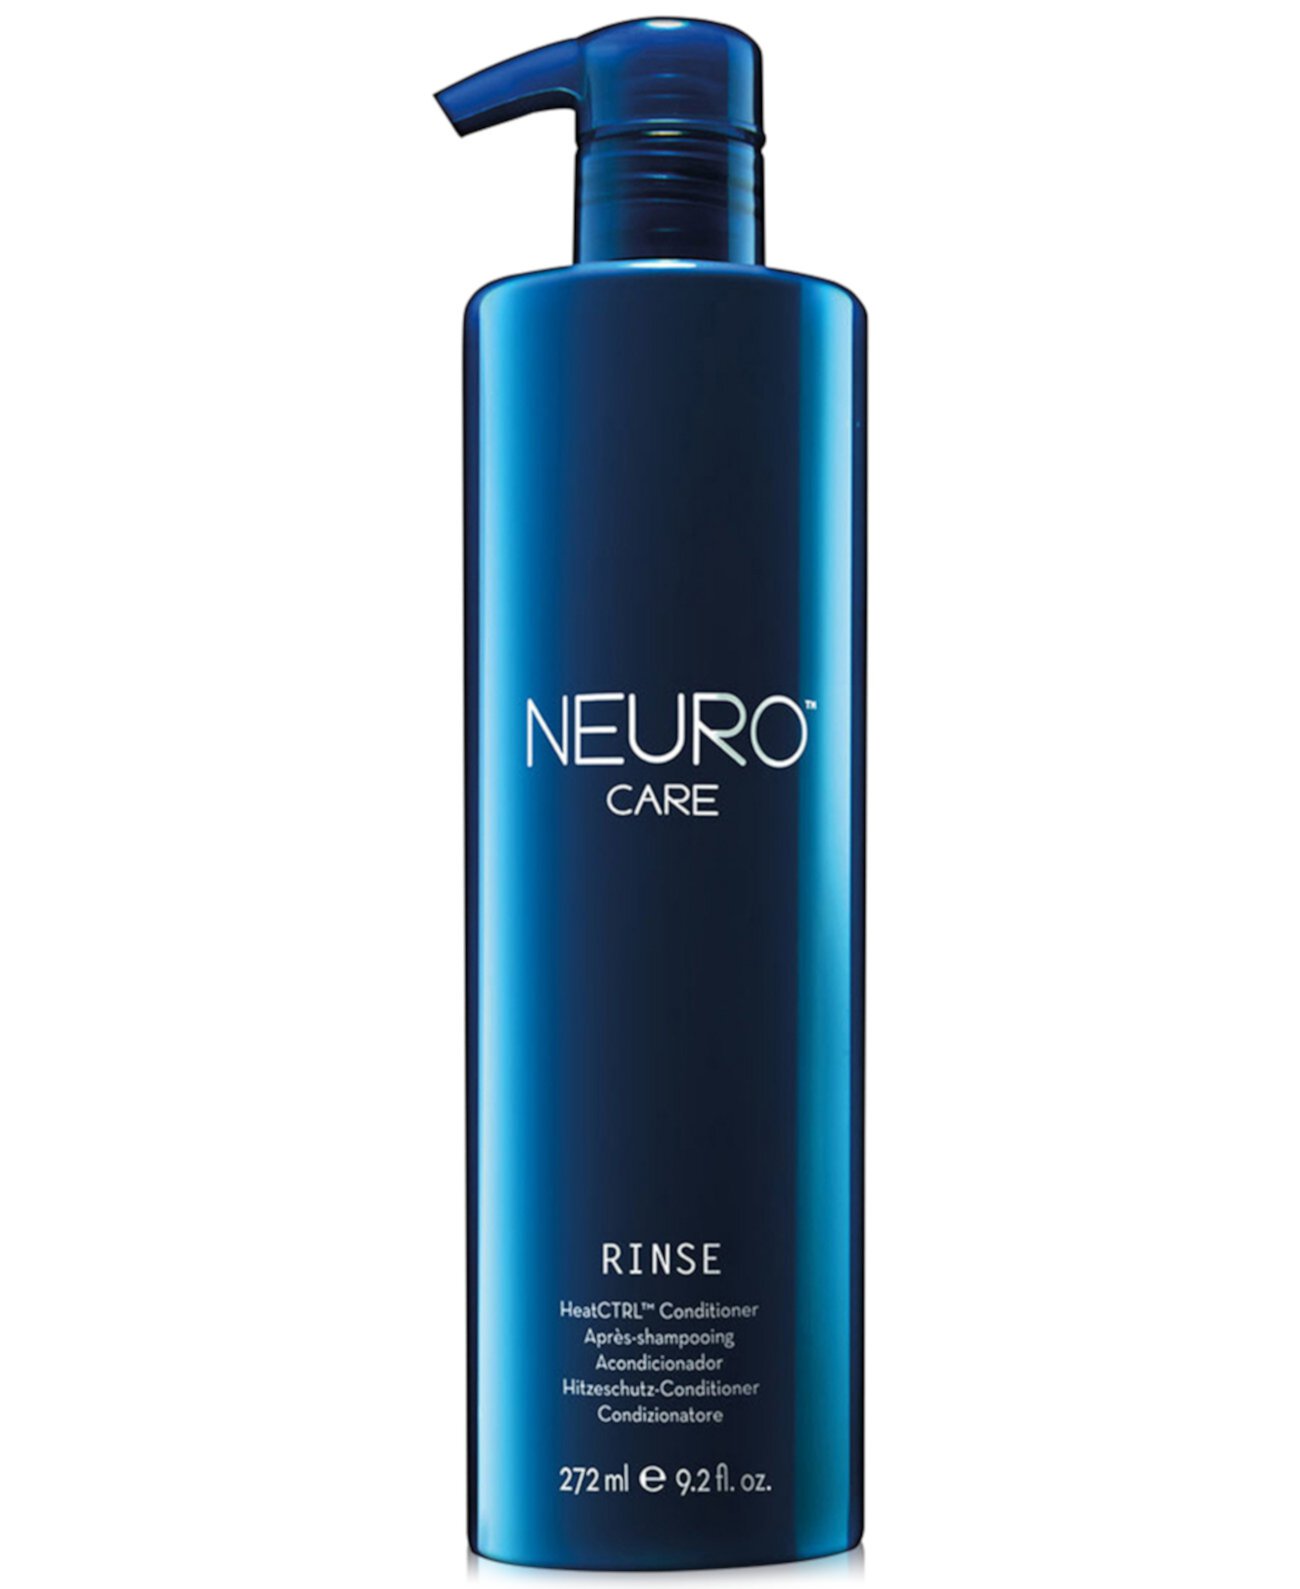 Кондиционер Neuro Care Rinse HeatCTRL, 9,2 унции, от PUREBEAUTY Salon & Spa PAUL MITCHELL